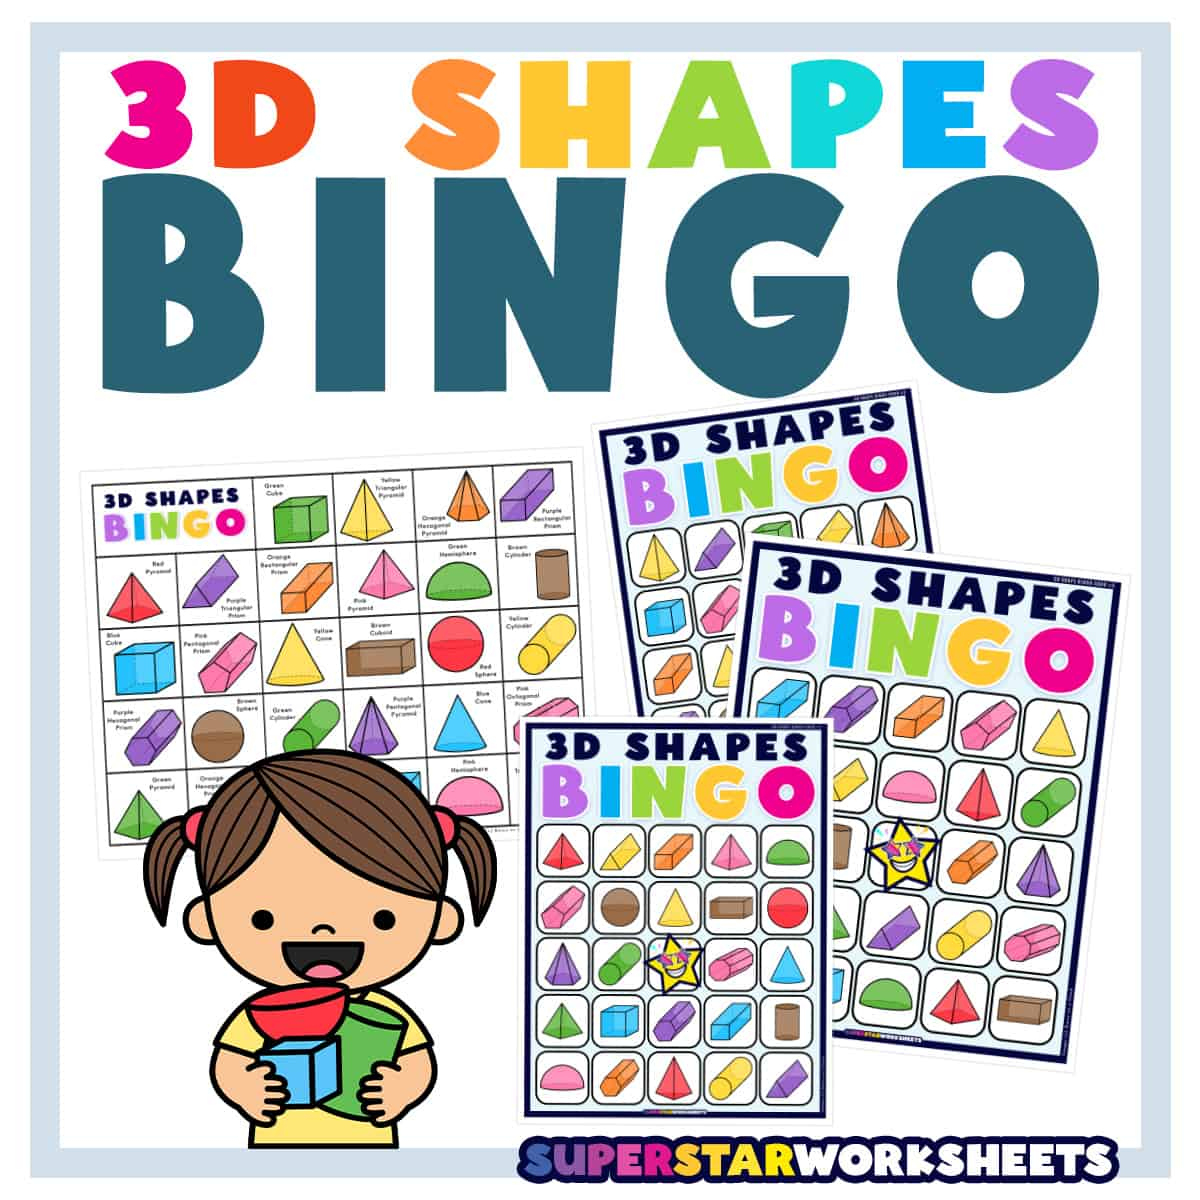 3D Shape Bingo - Superstar Worksheets with regard to 3D Shape Bingo Free Printable